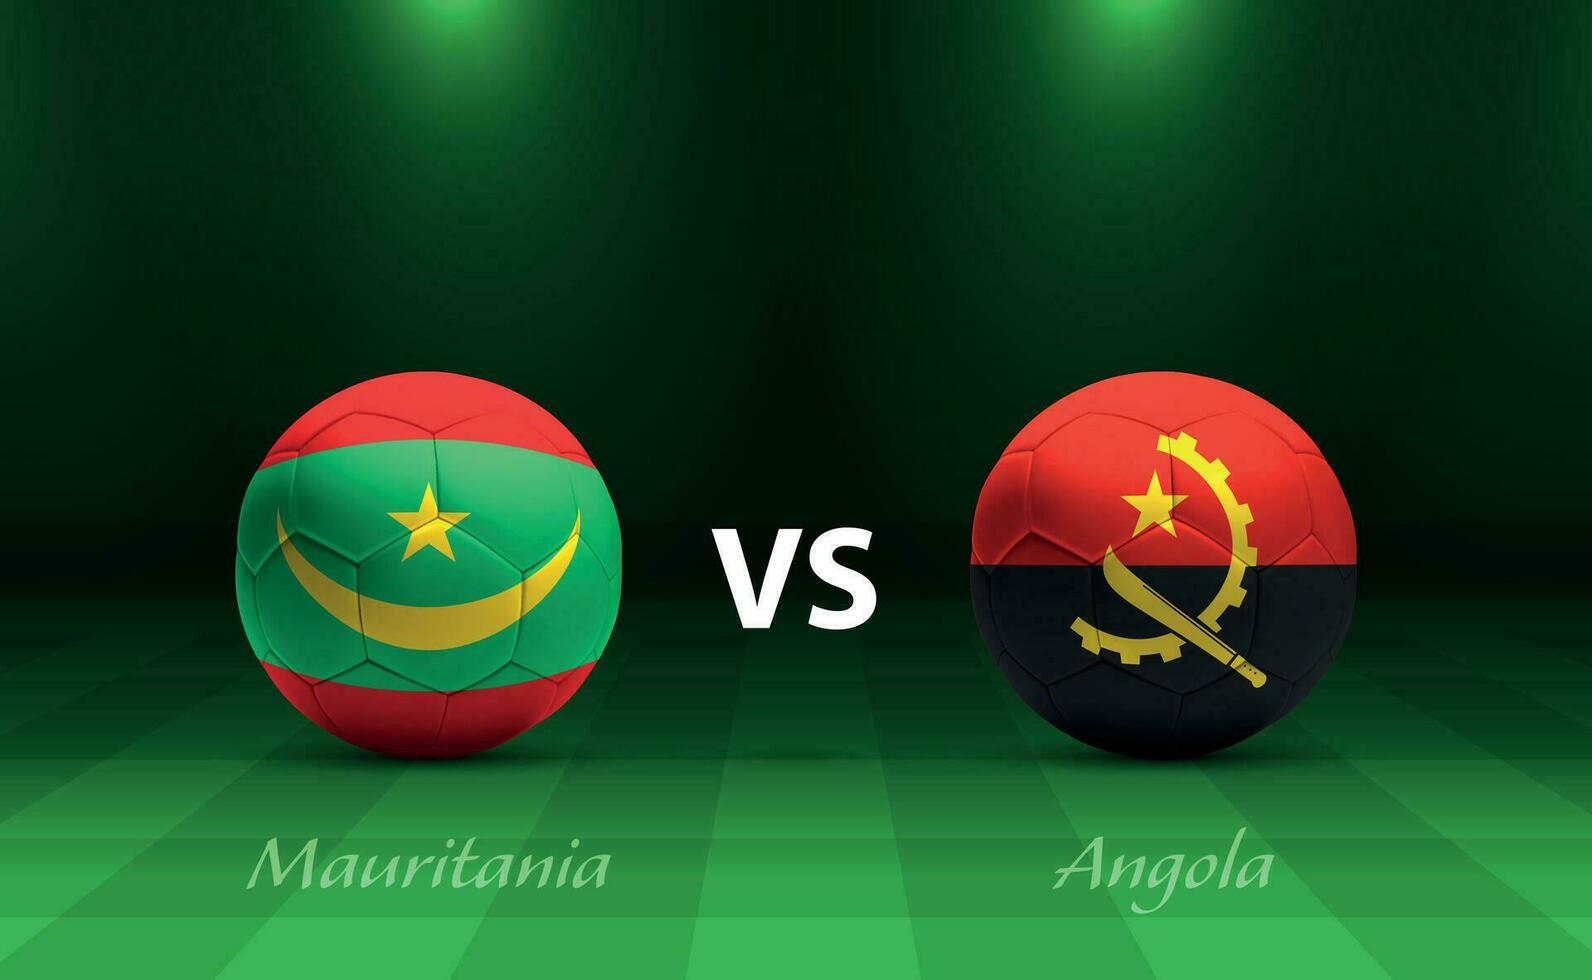 Mauritania vs Angola football scoreboard broadcast template vector